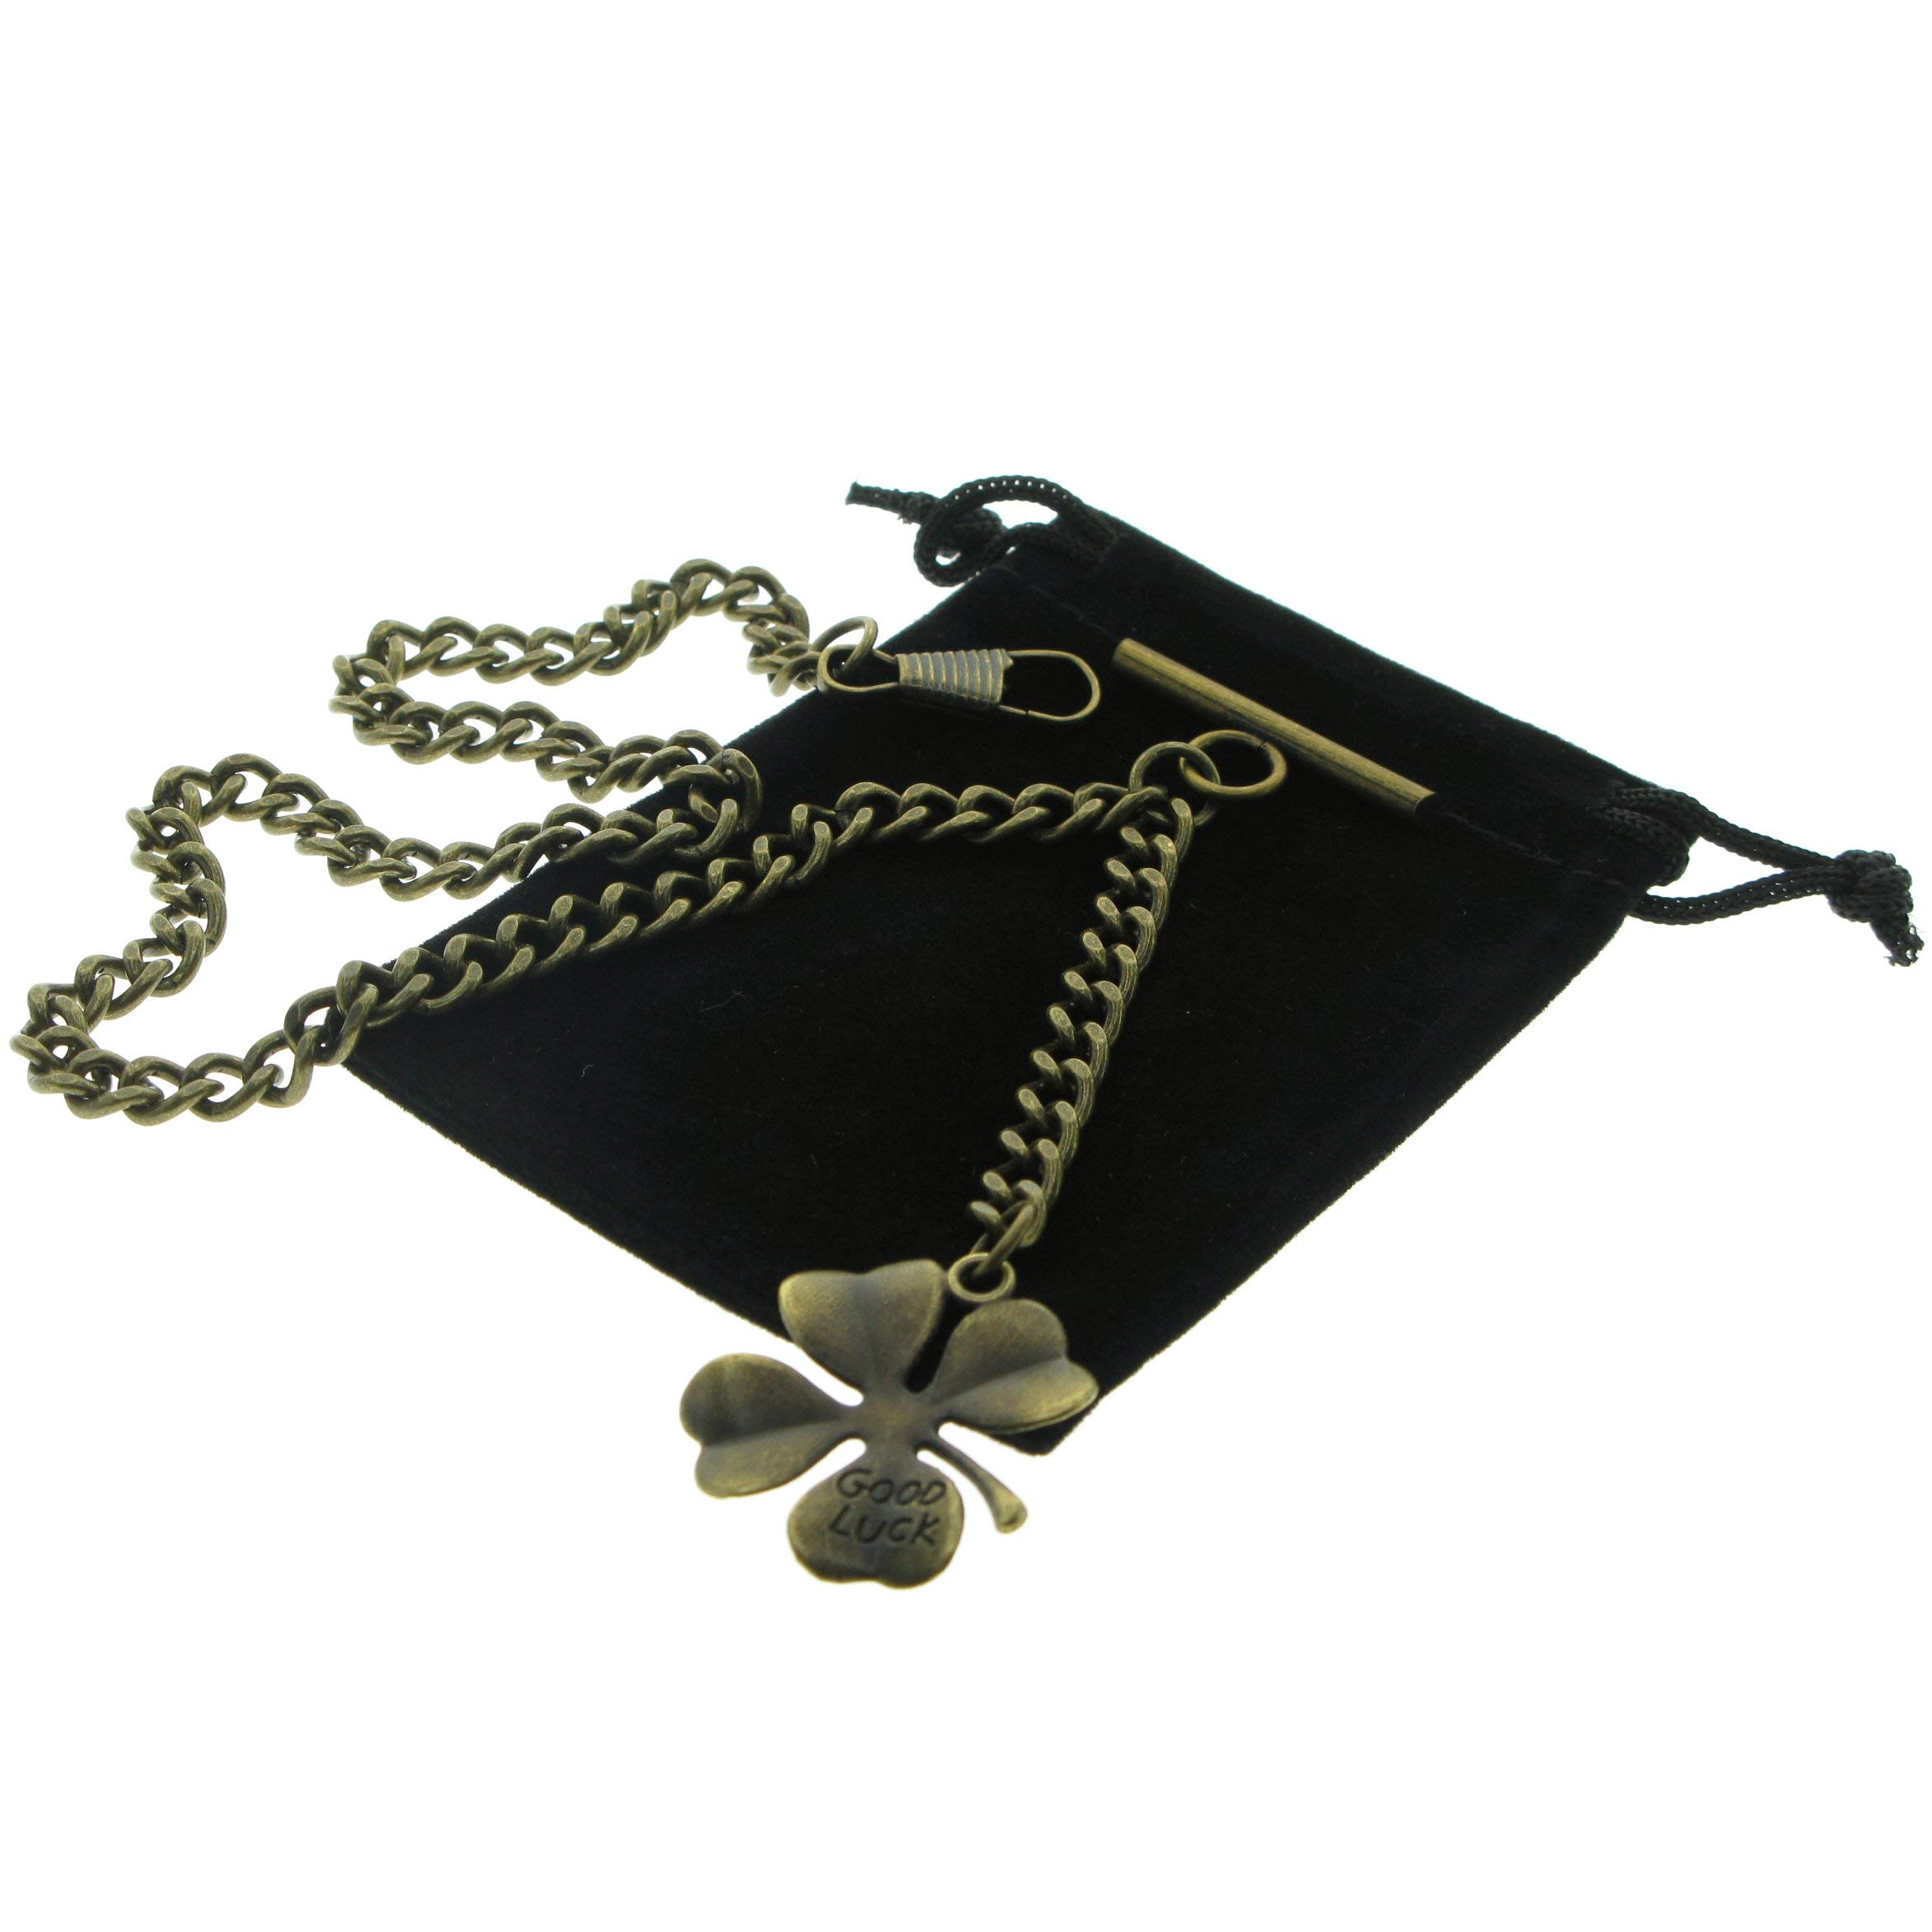 Albert Chain Pocket Watch Chains for Men Antique Brass Color Four-Leaf Clover Medal Design Fob T Bar AC143